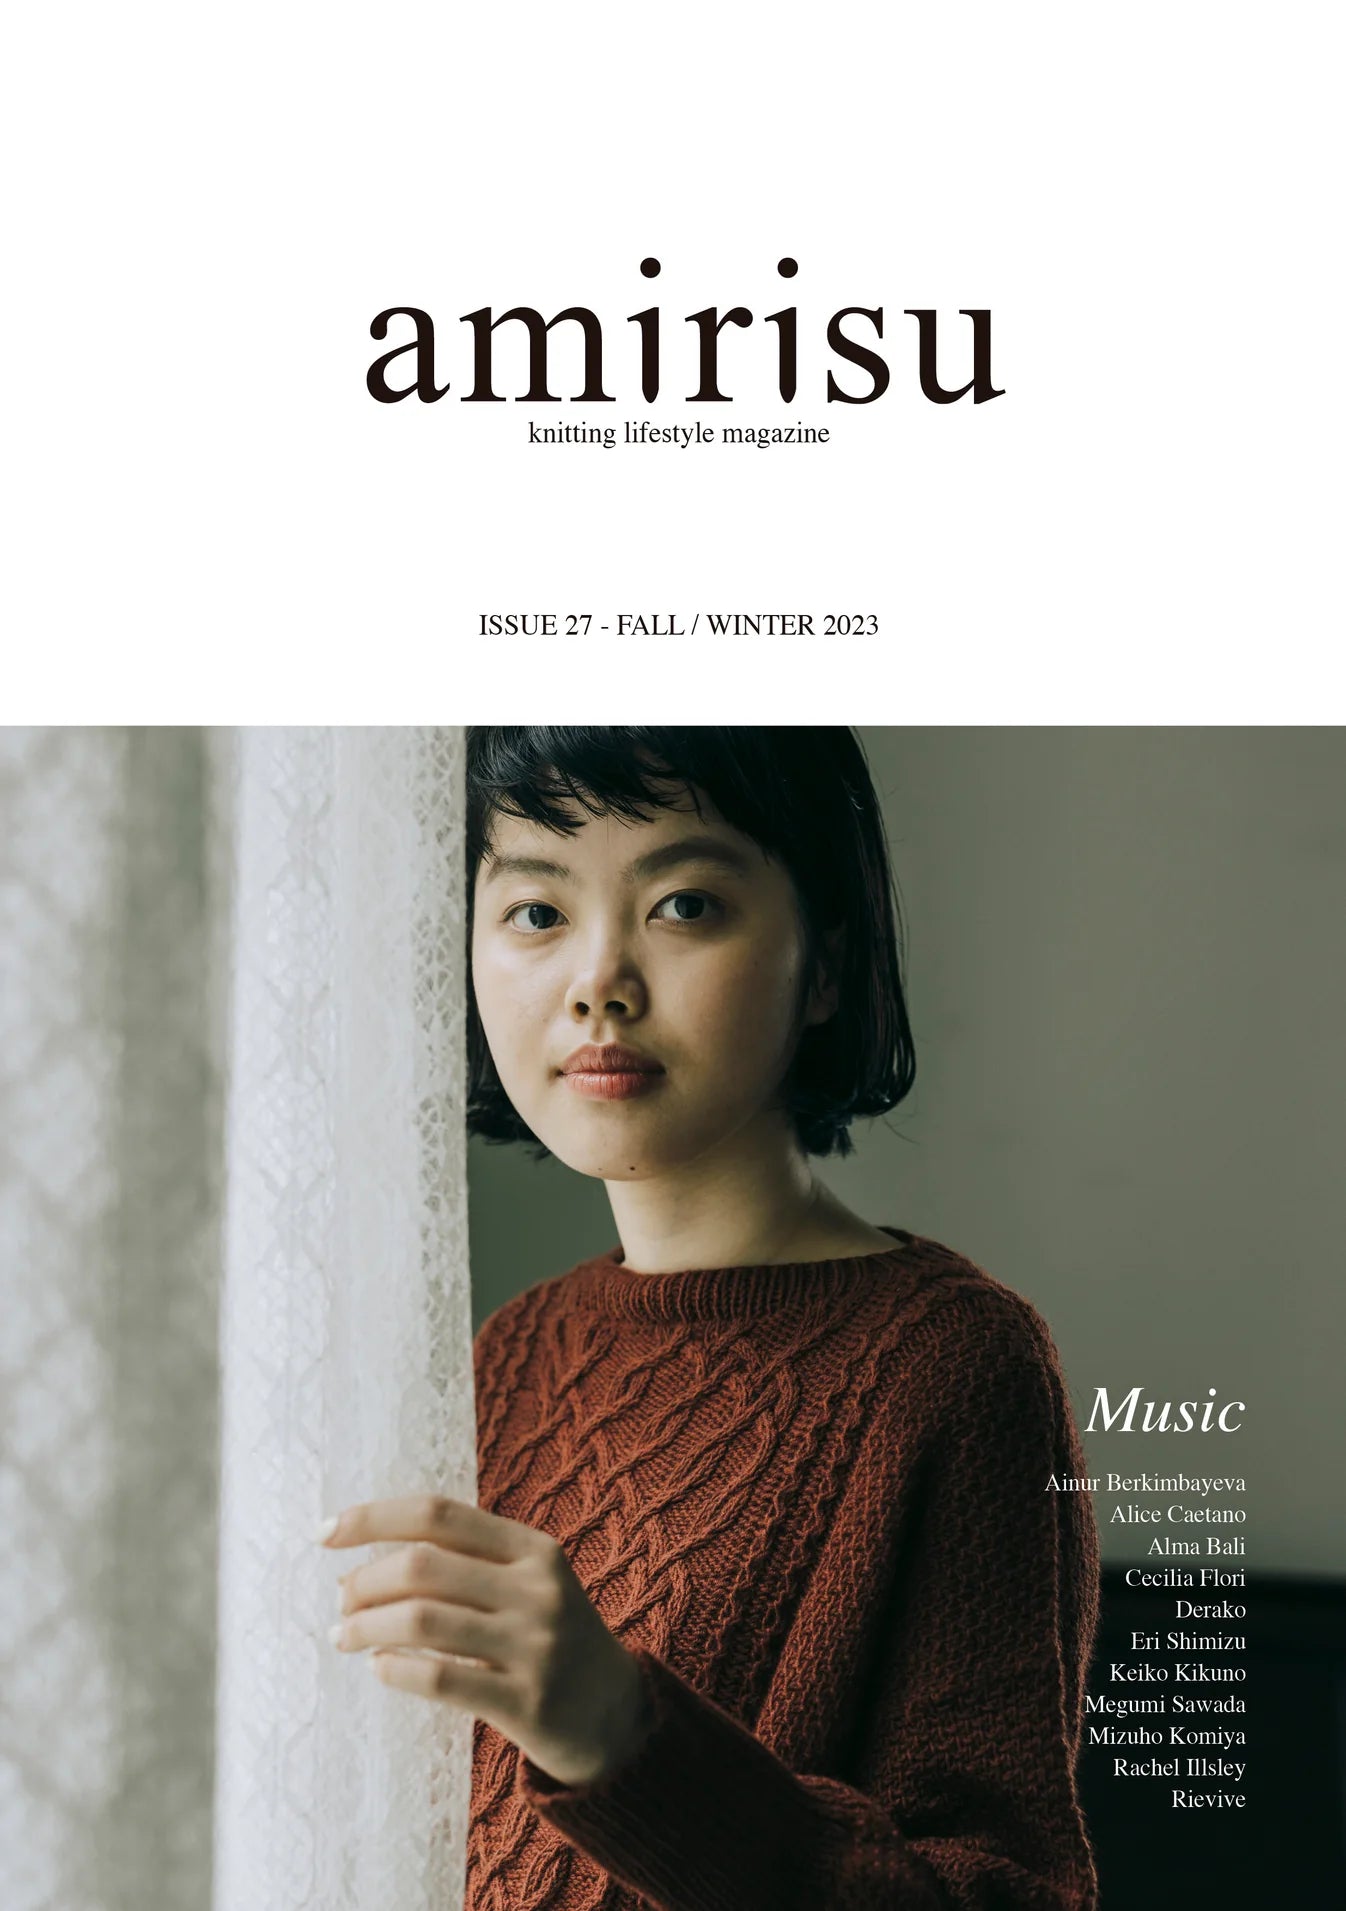 Amirisu - Issue 27 Autumn/Winter 2023 Amirisu